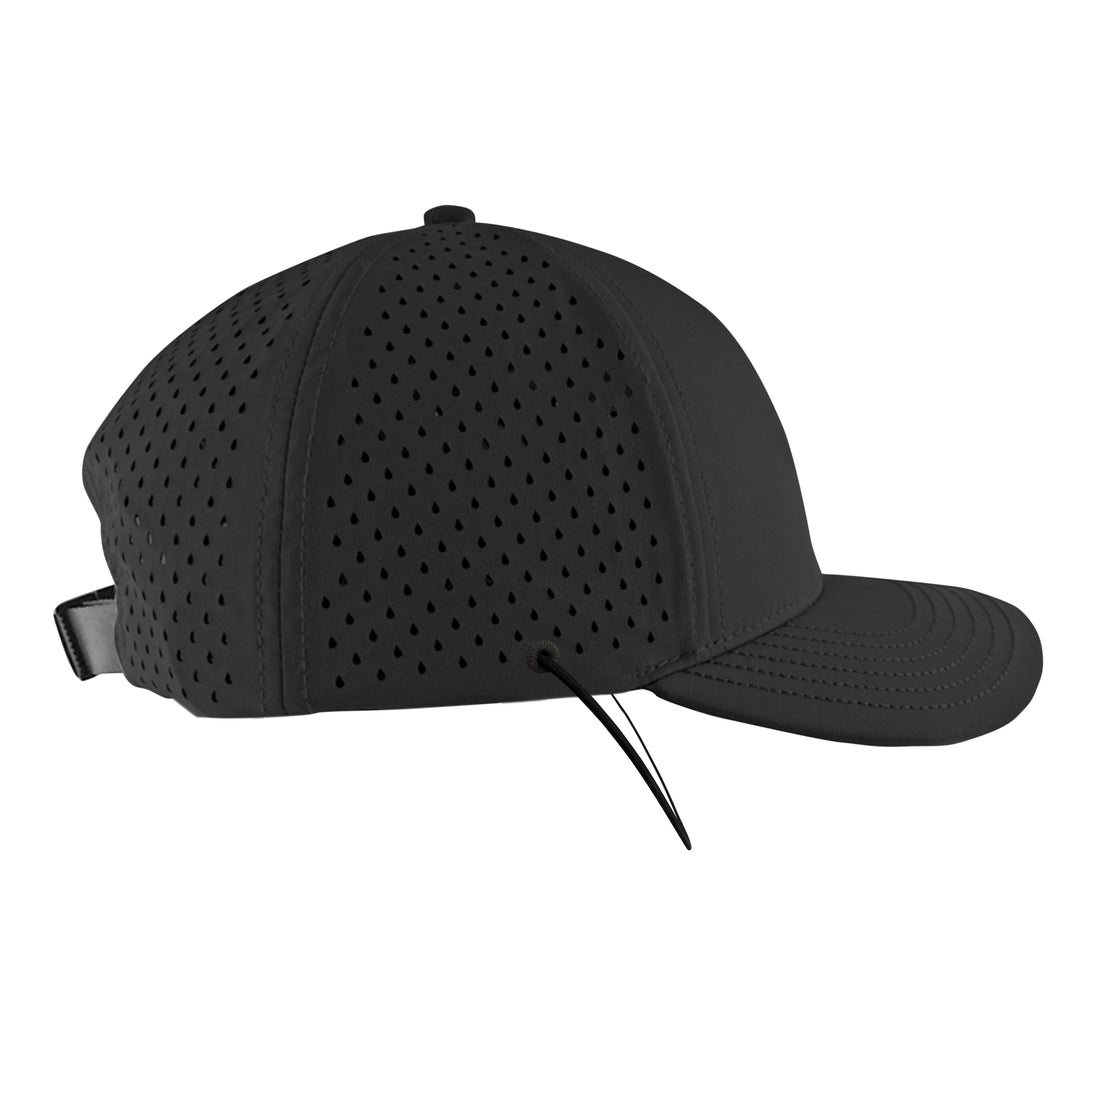 Black Surf Brain Hat - with elastic chin strap